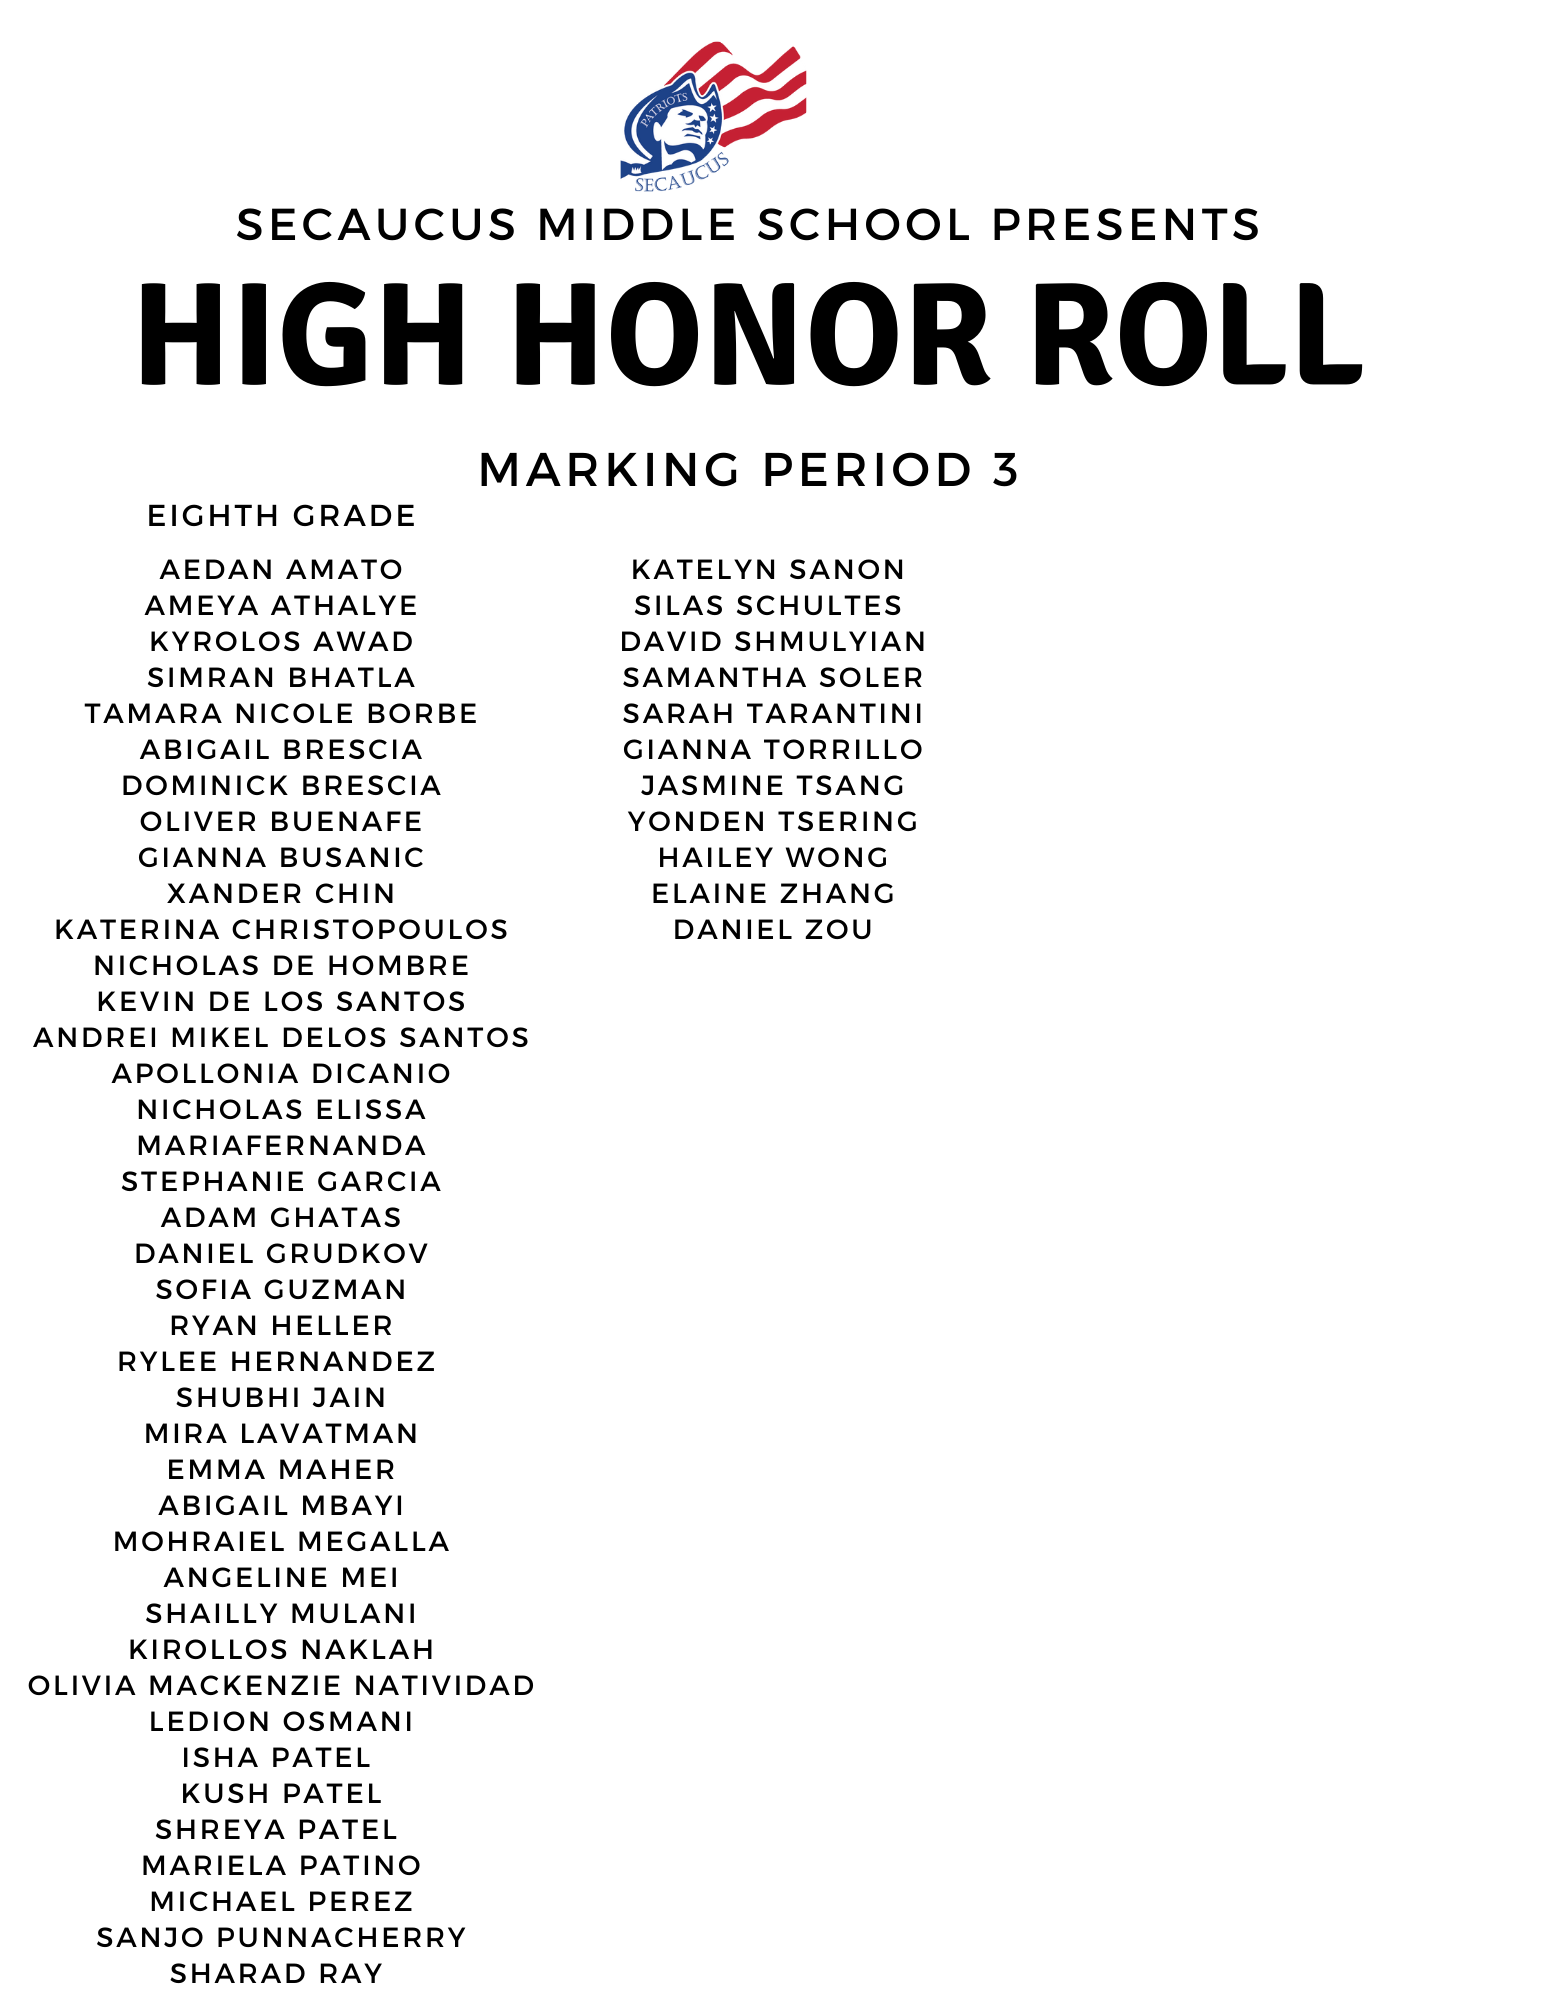 8th grade high honors